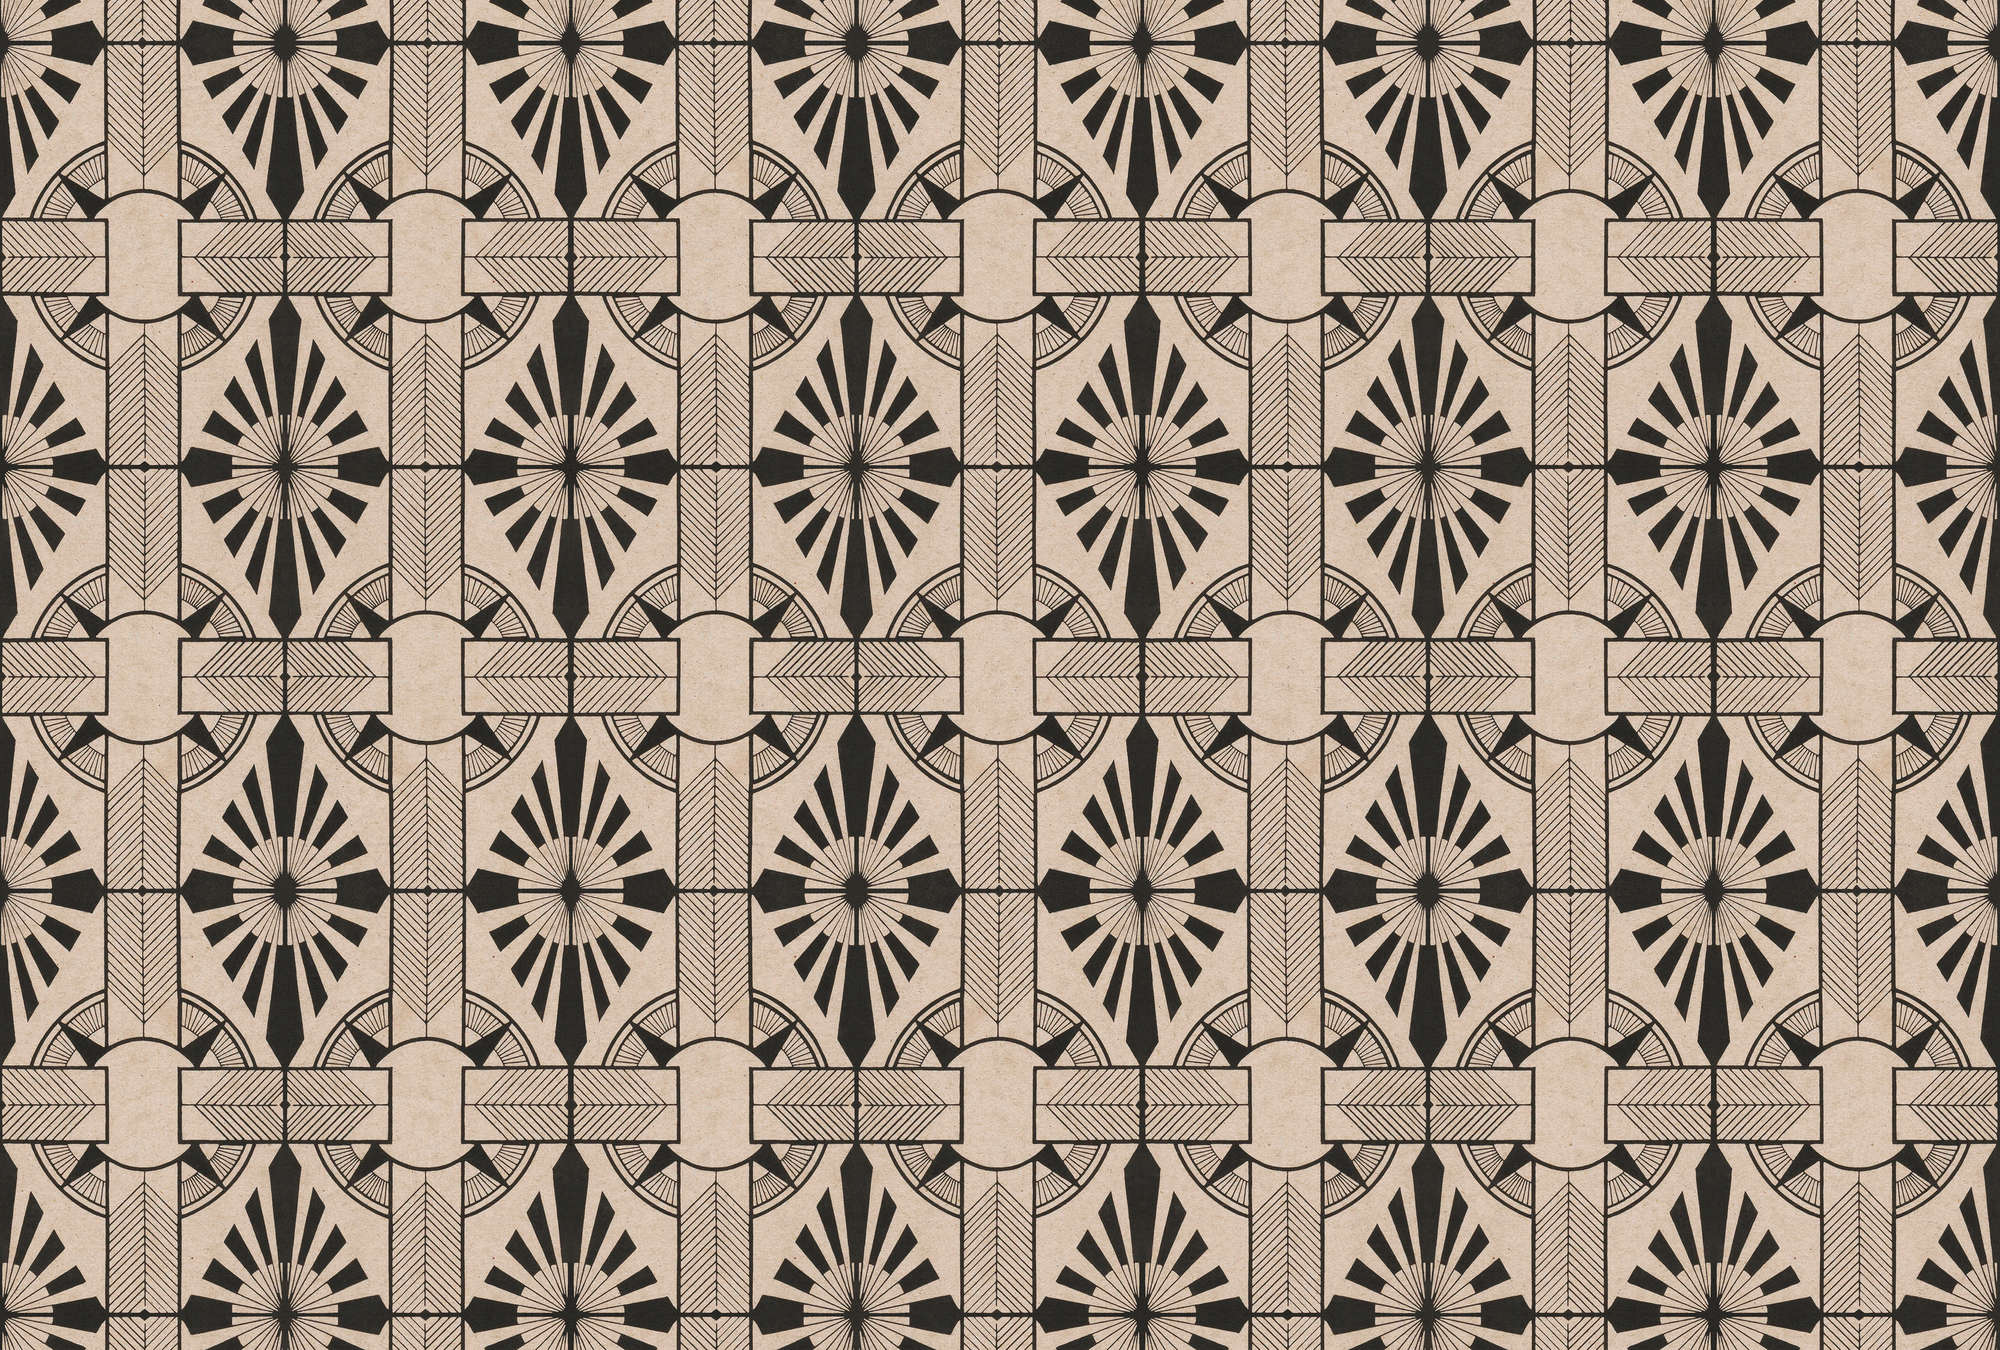             Astoria 2 - retro photo wallpaper art deco pattern black & beige
        